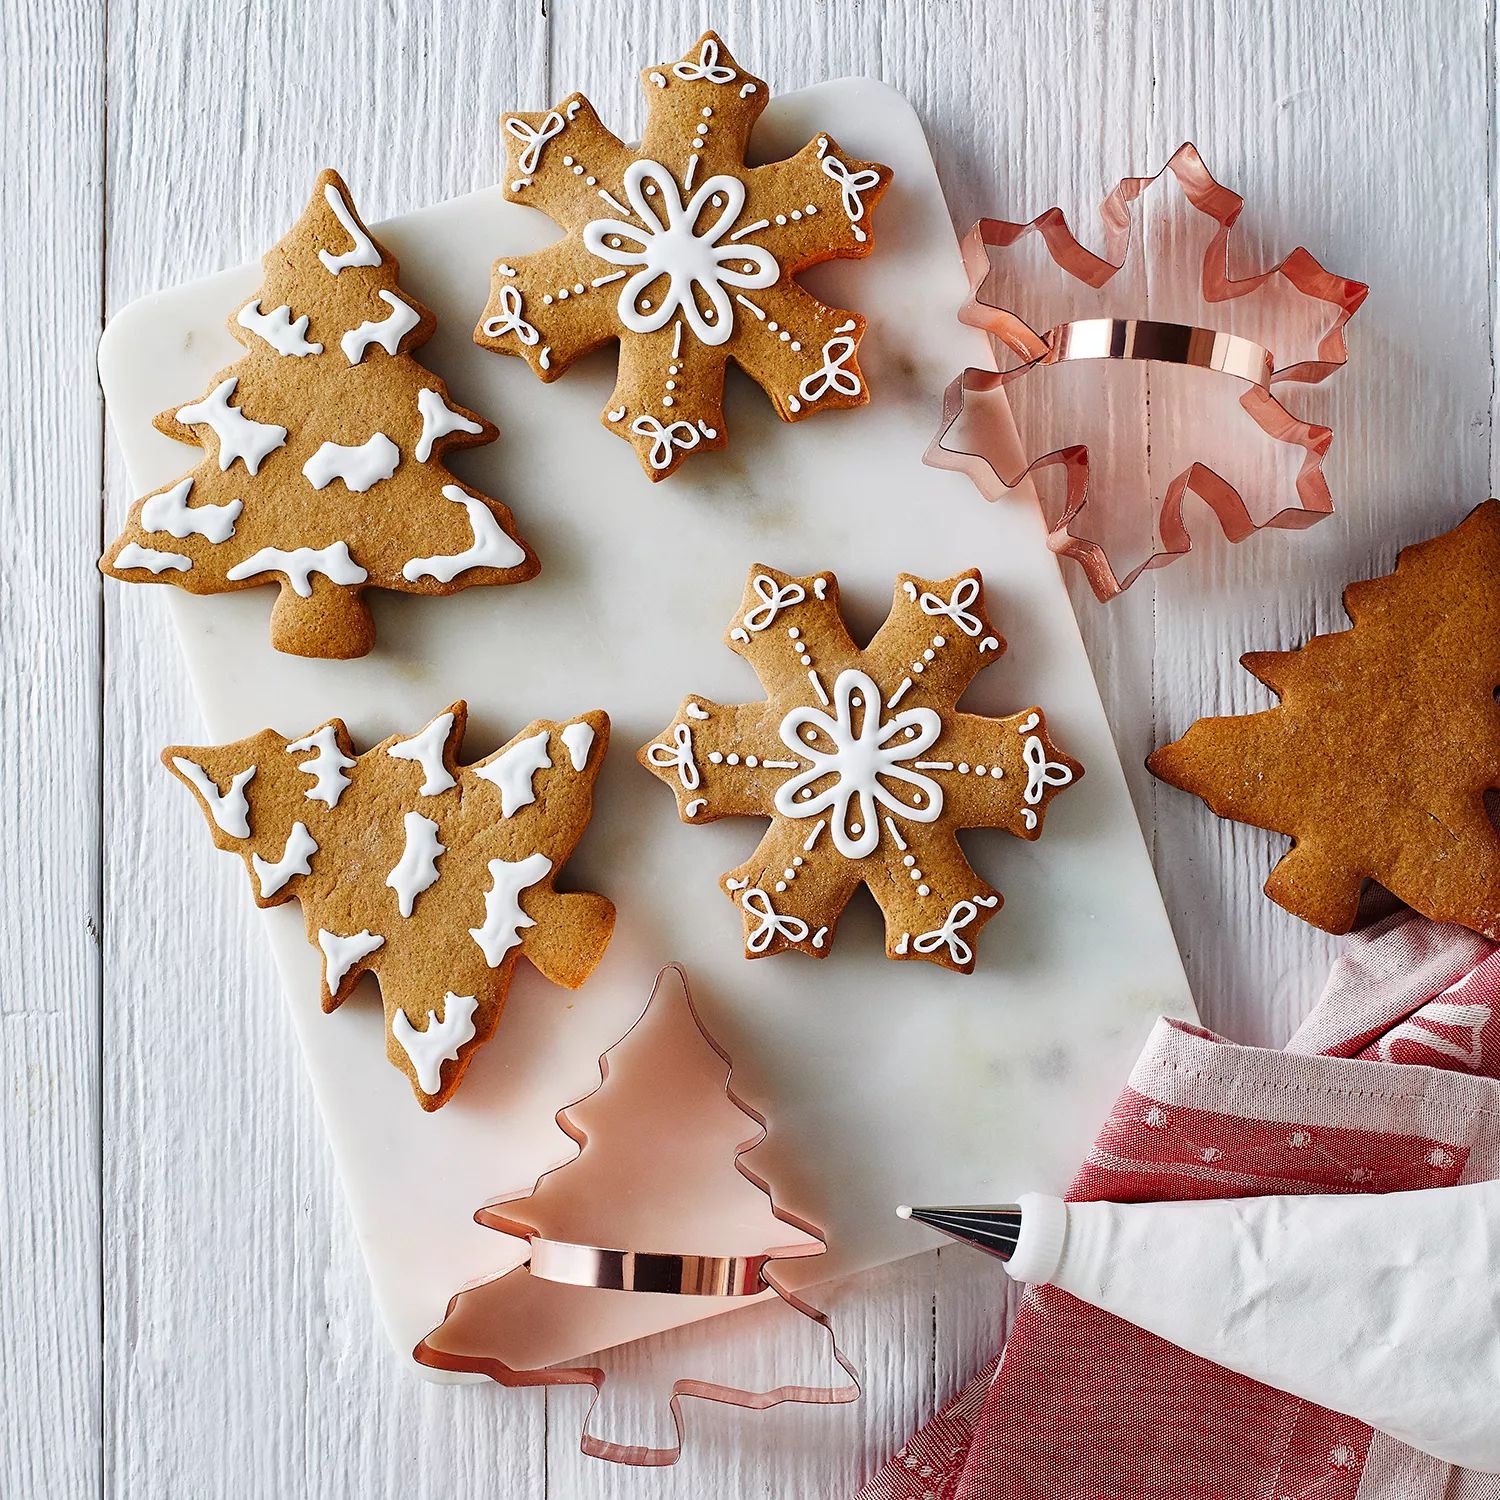 Sur La Table Copper-Plated Christmas Tree Cookie Cutter with Handle | Sur La Table | Sur La Table